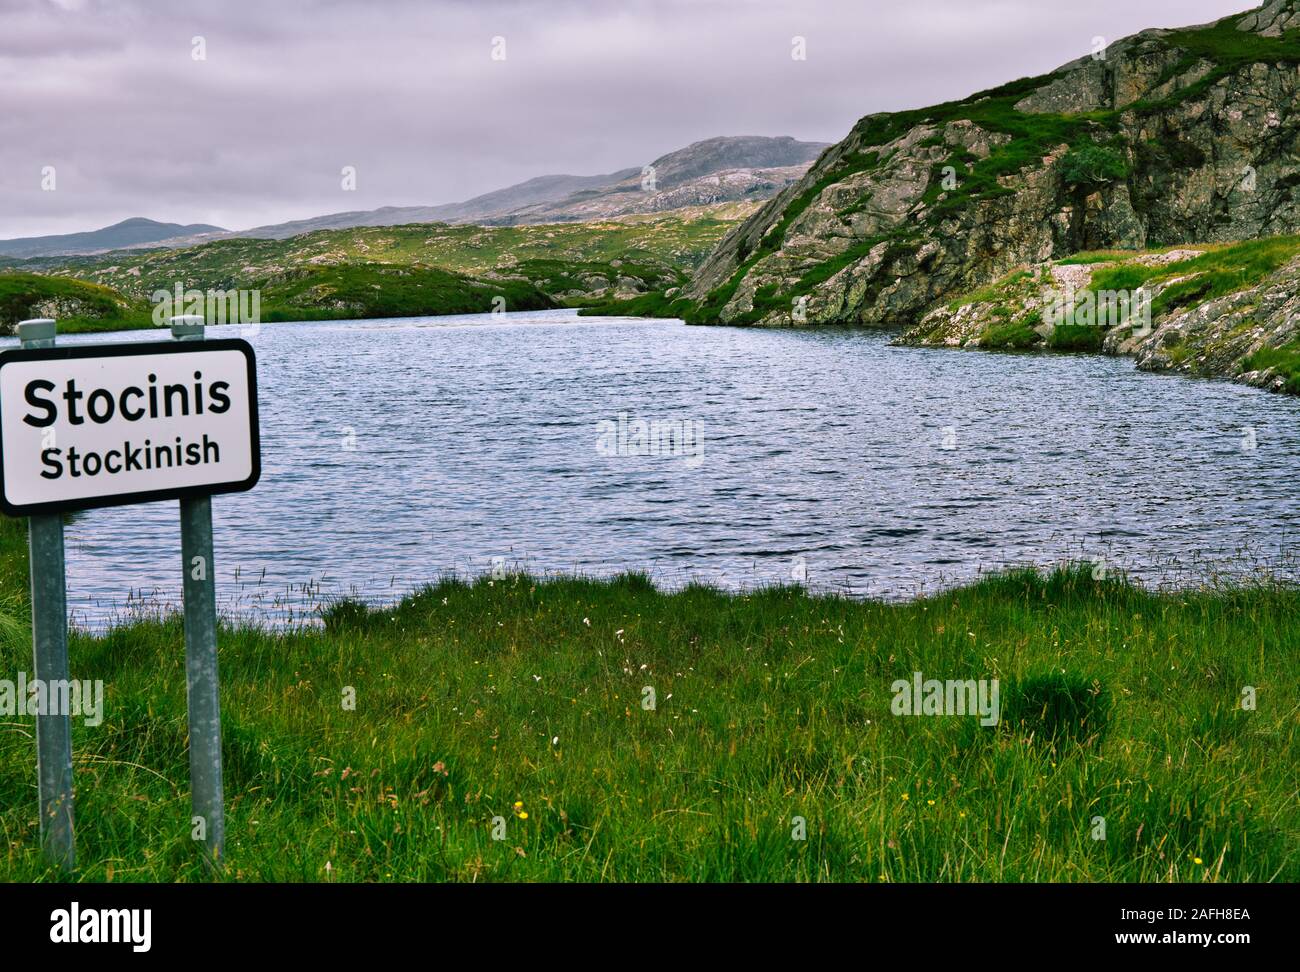 Stockinish loch and island, Isle of Harris, Outer Hebrides, Scotland Stock Photo